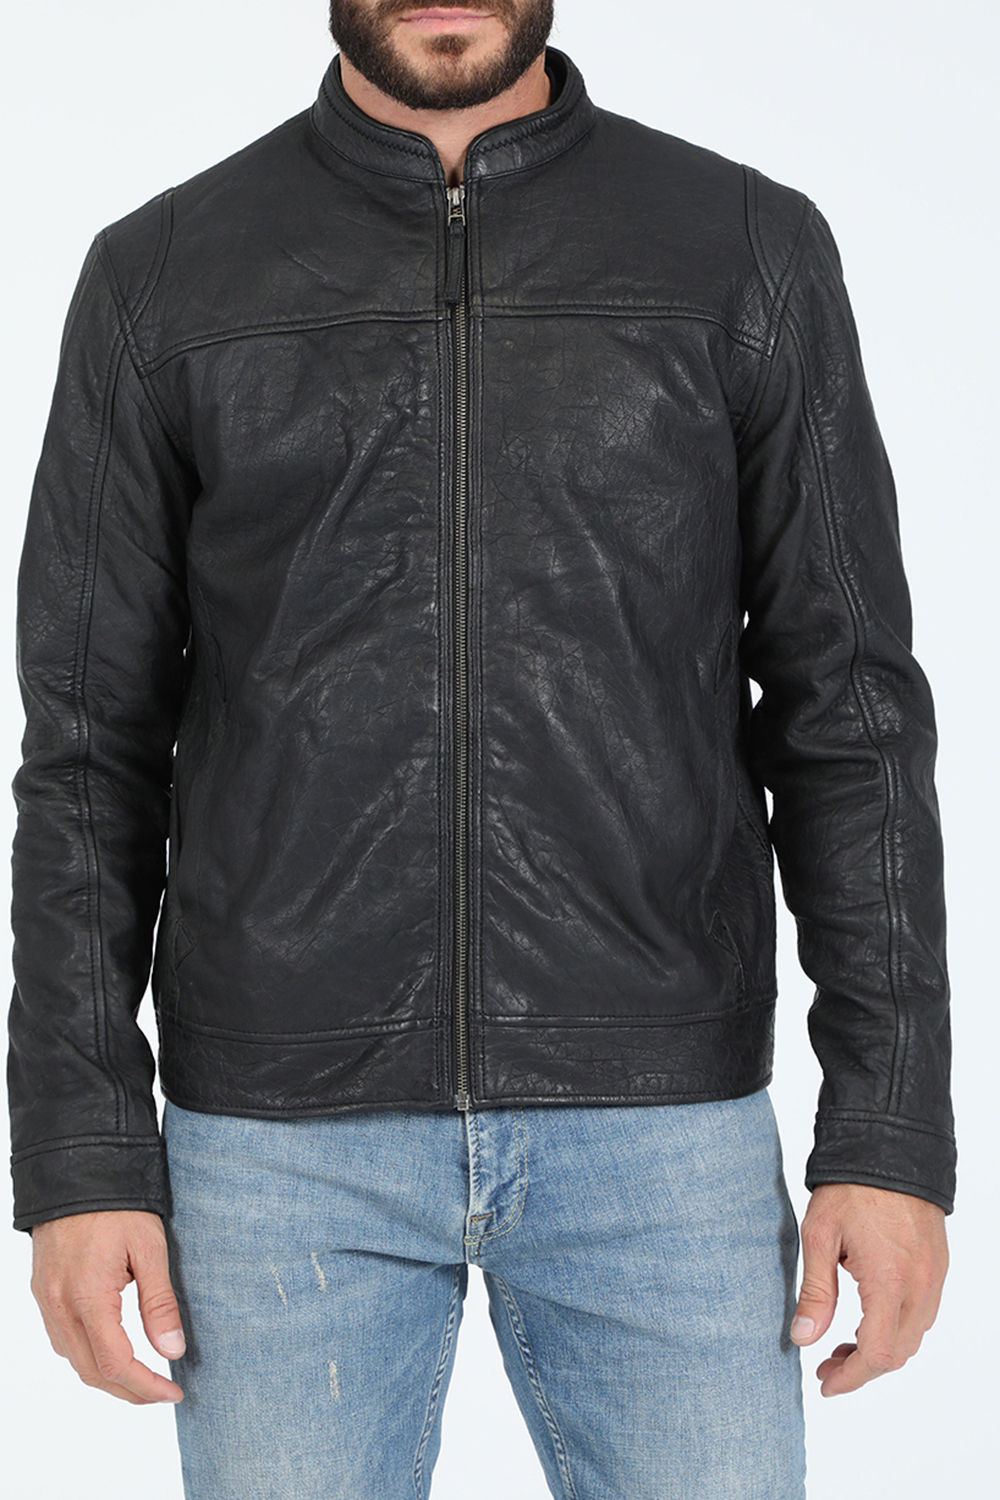 GABBA – Ανδρικό δερμάτινο jacket GABBA Benton Black Leather Jacket μαύρο 1788013.0-0071